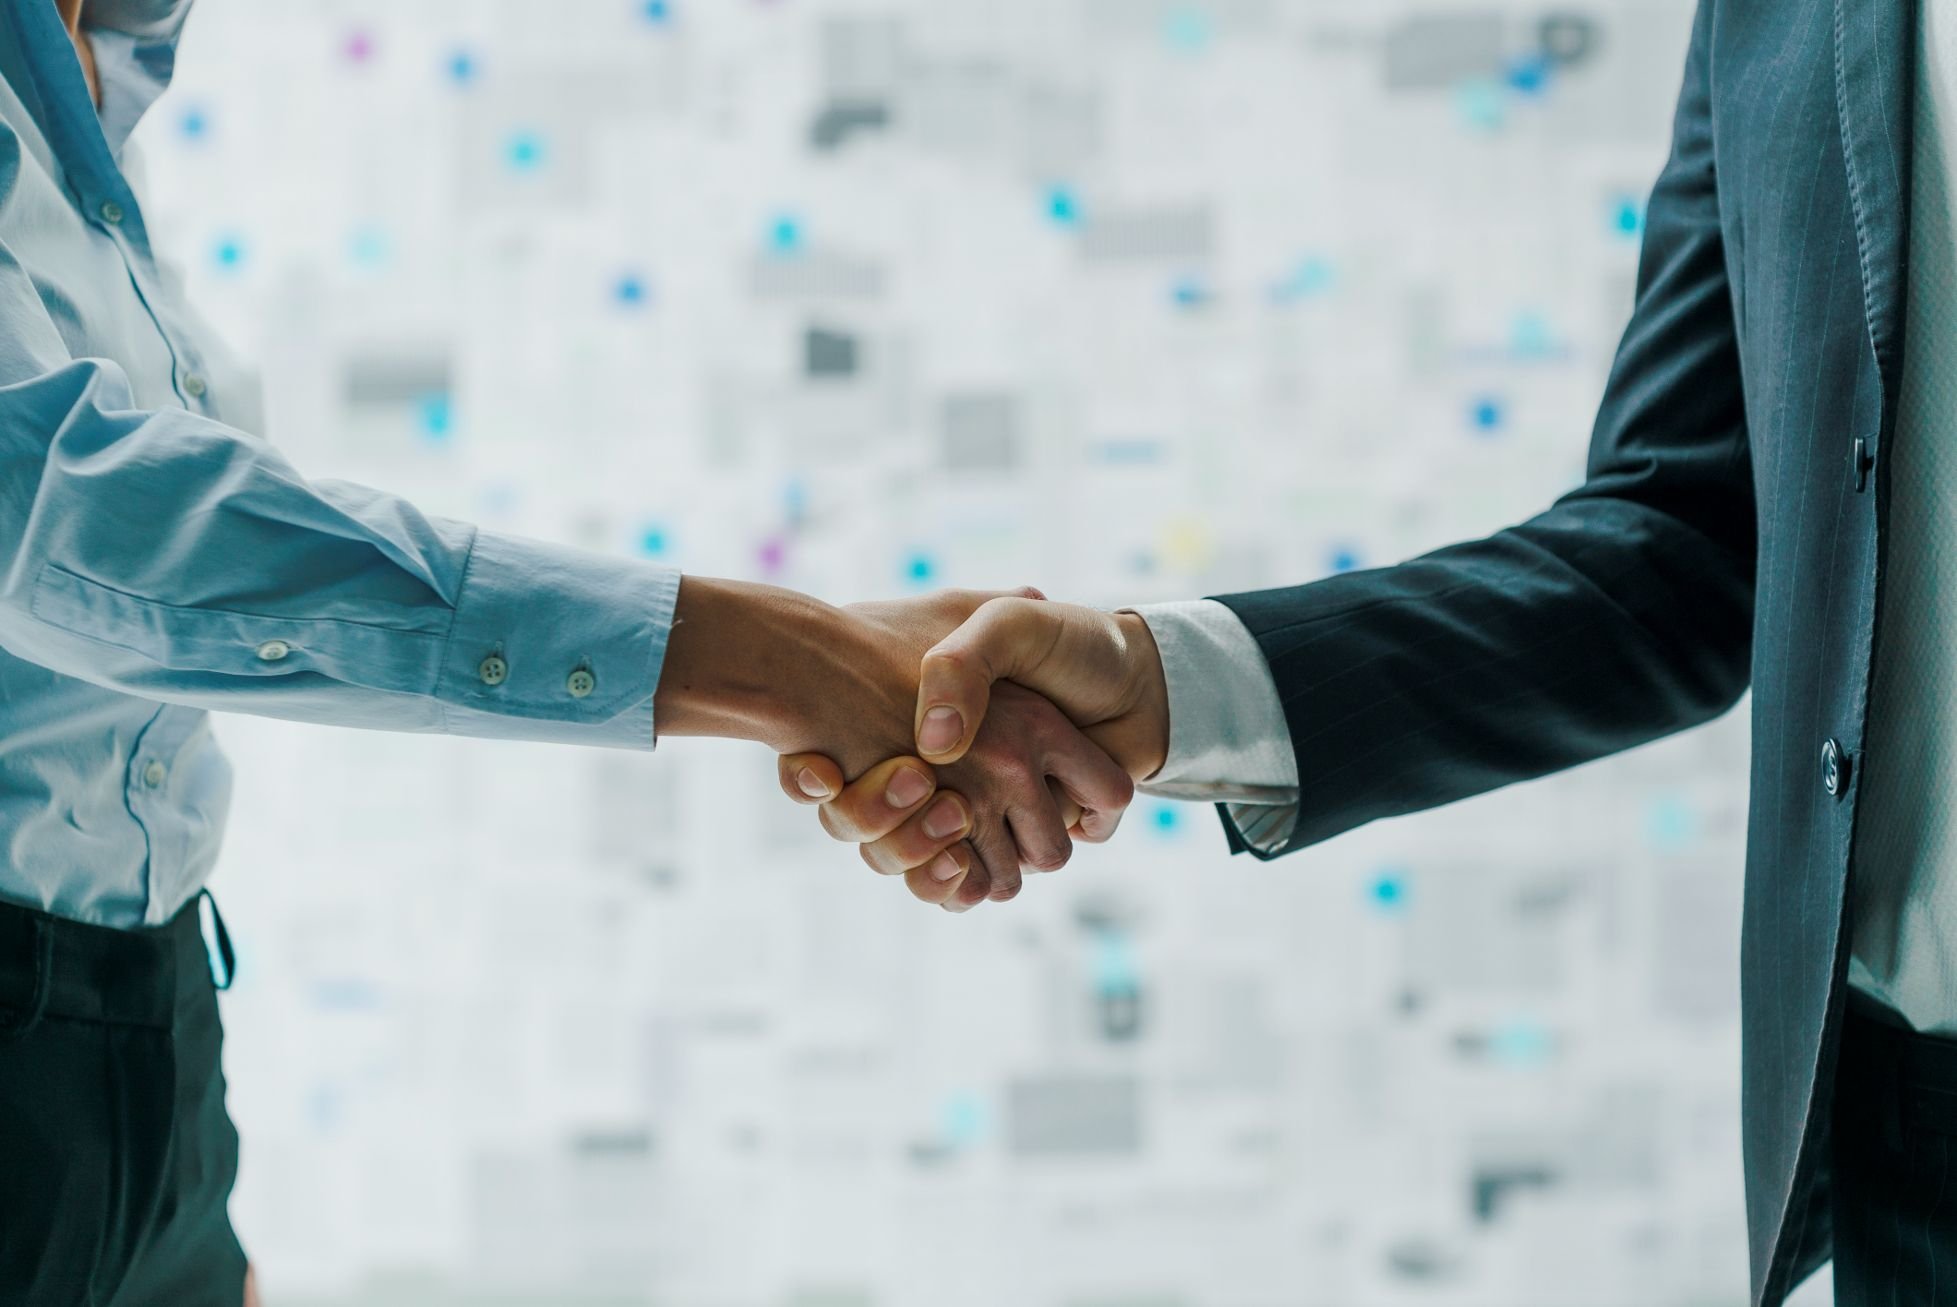 Business partners shaking hands 2021 08 30 02 12 08 utc